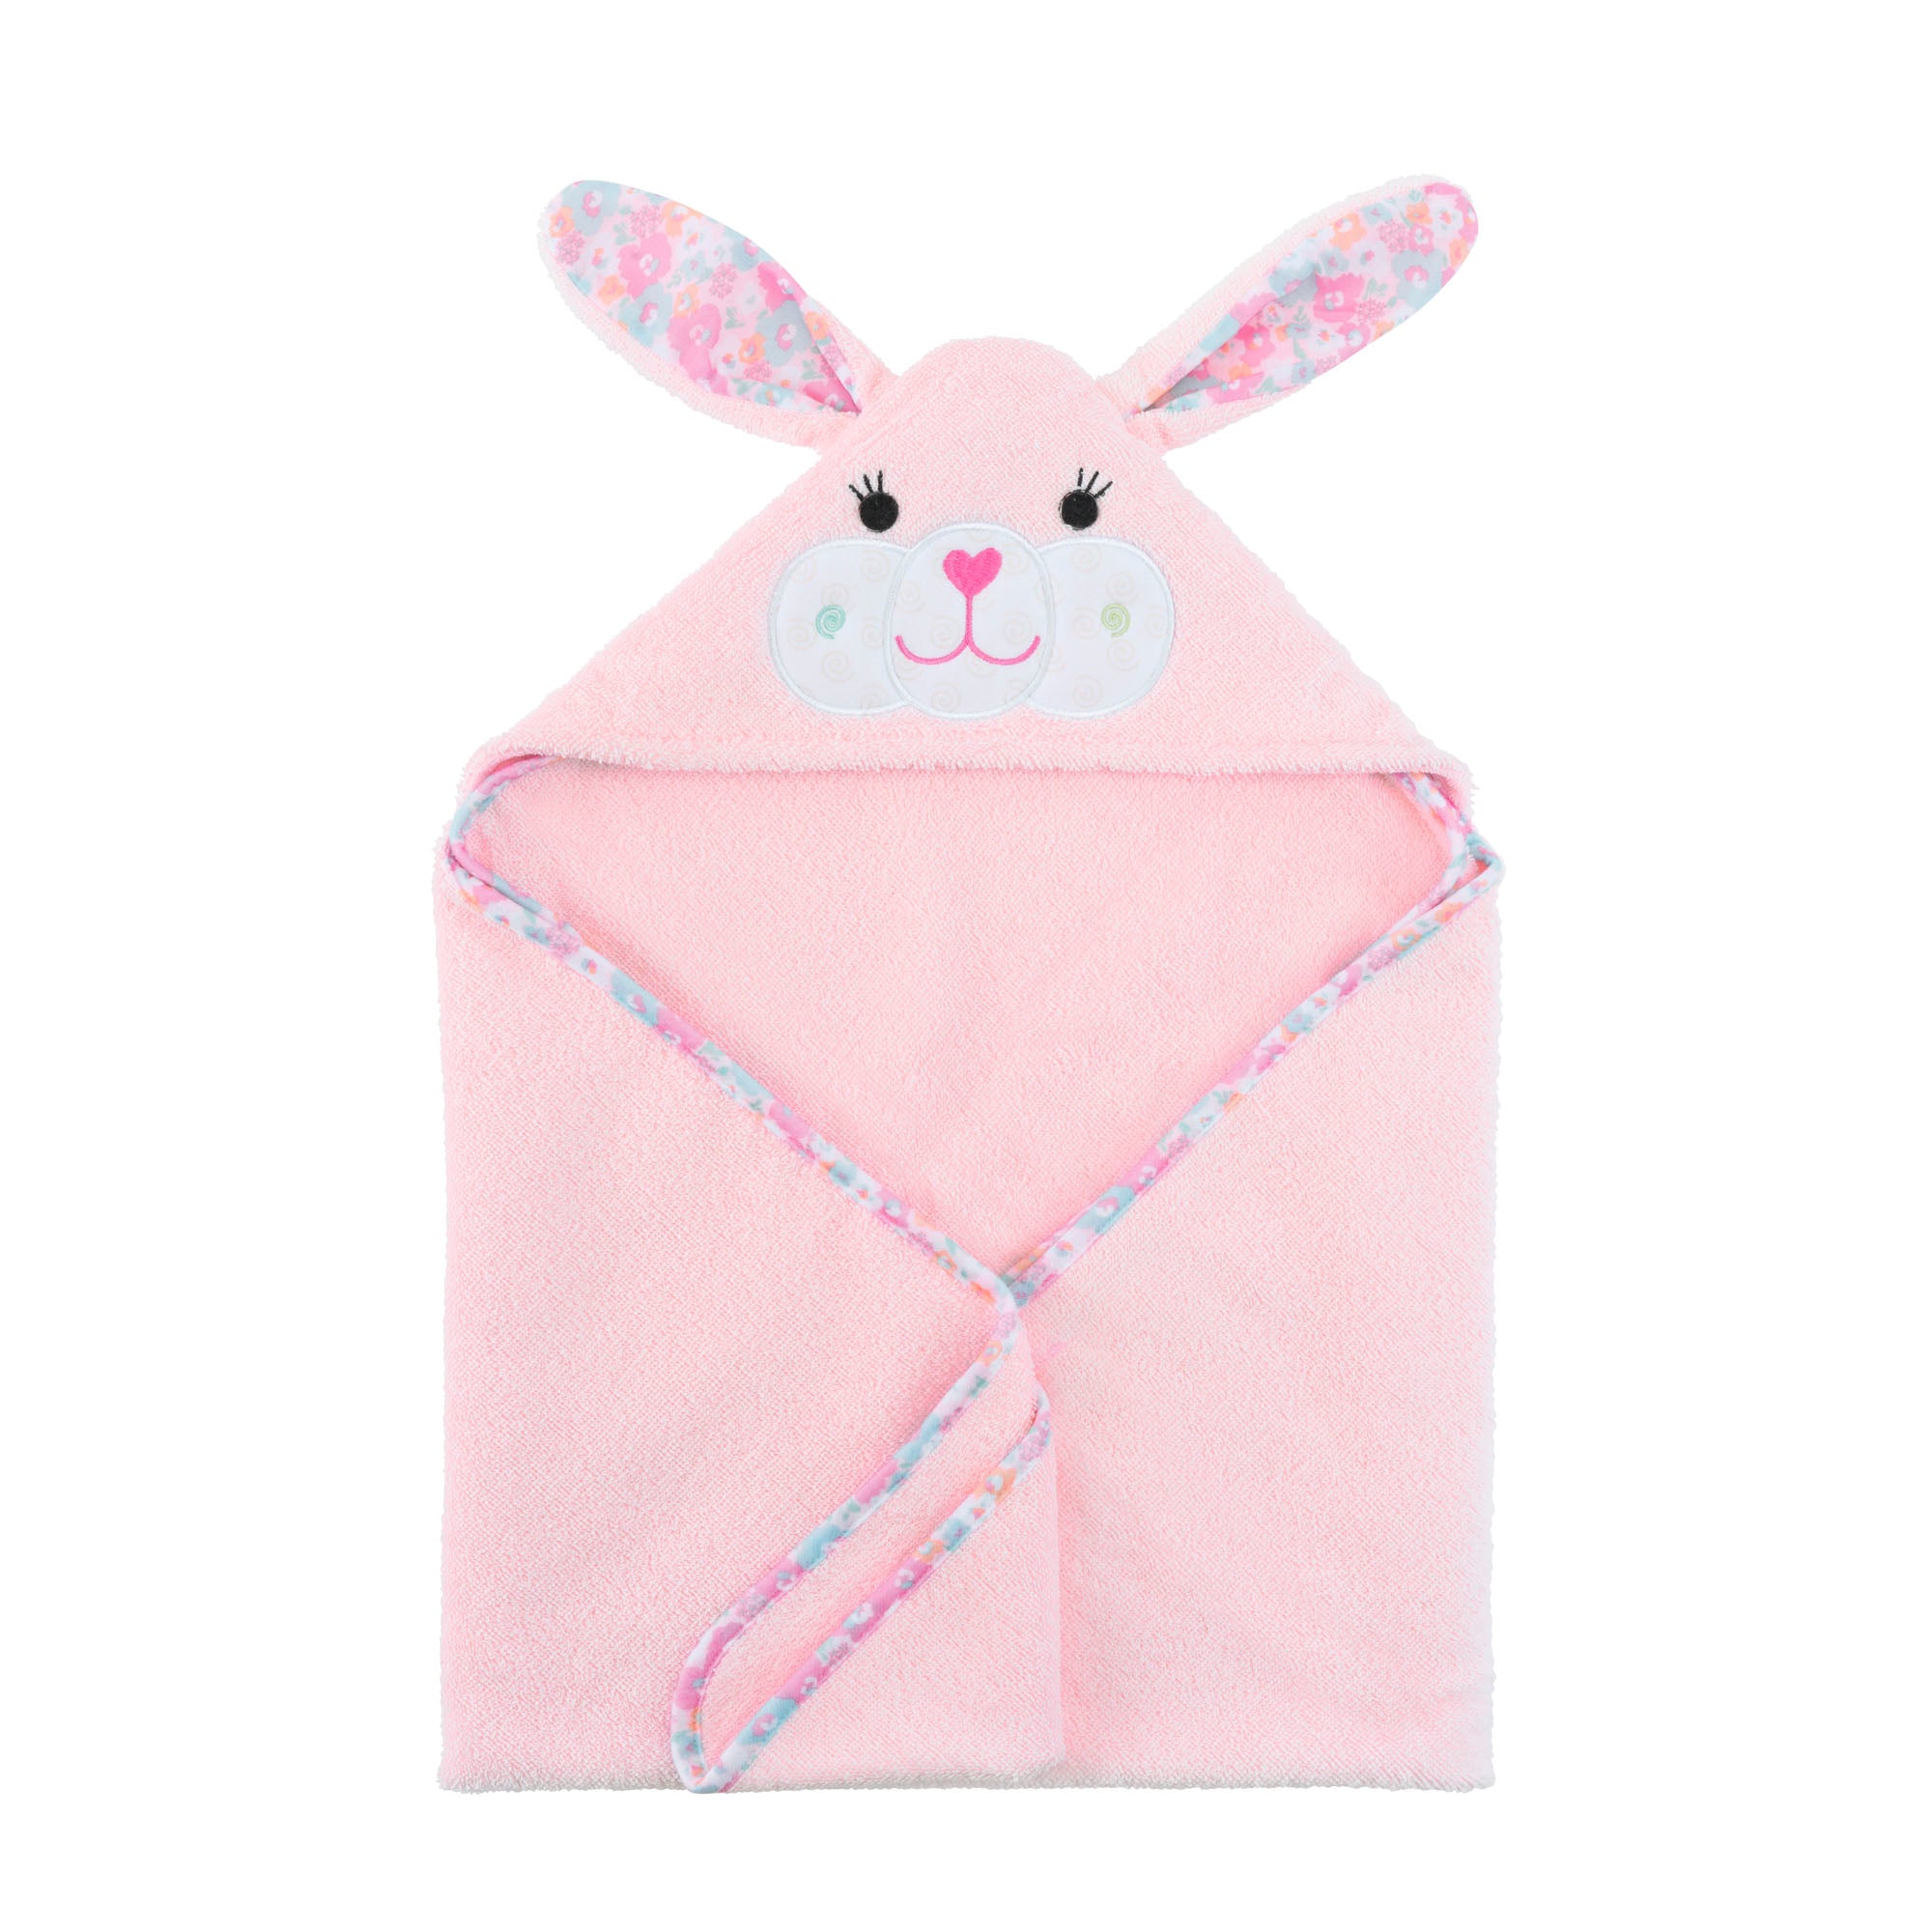 bunny towel, pink towel, baby towel